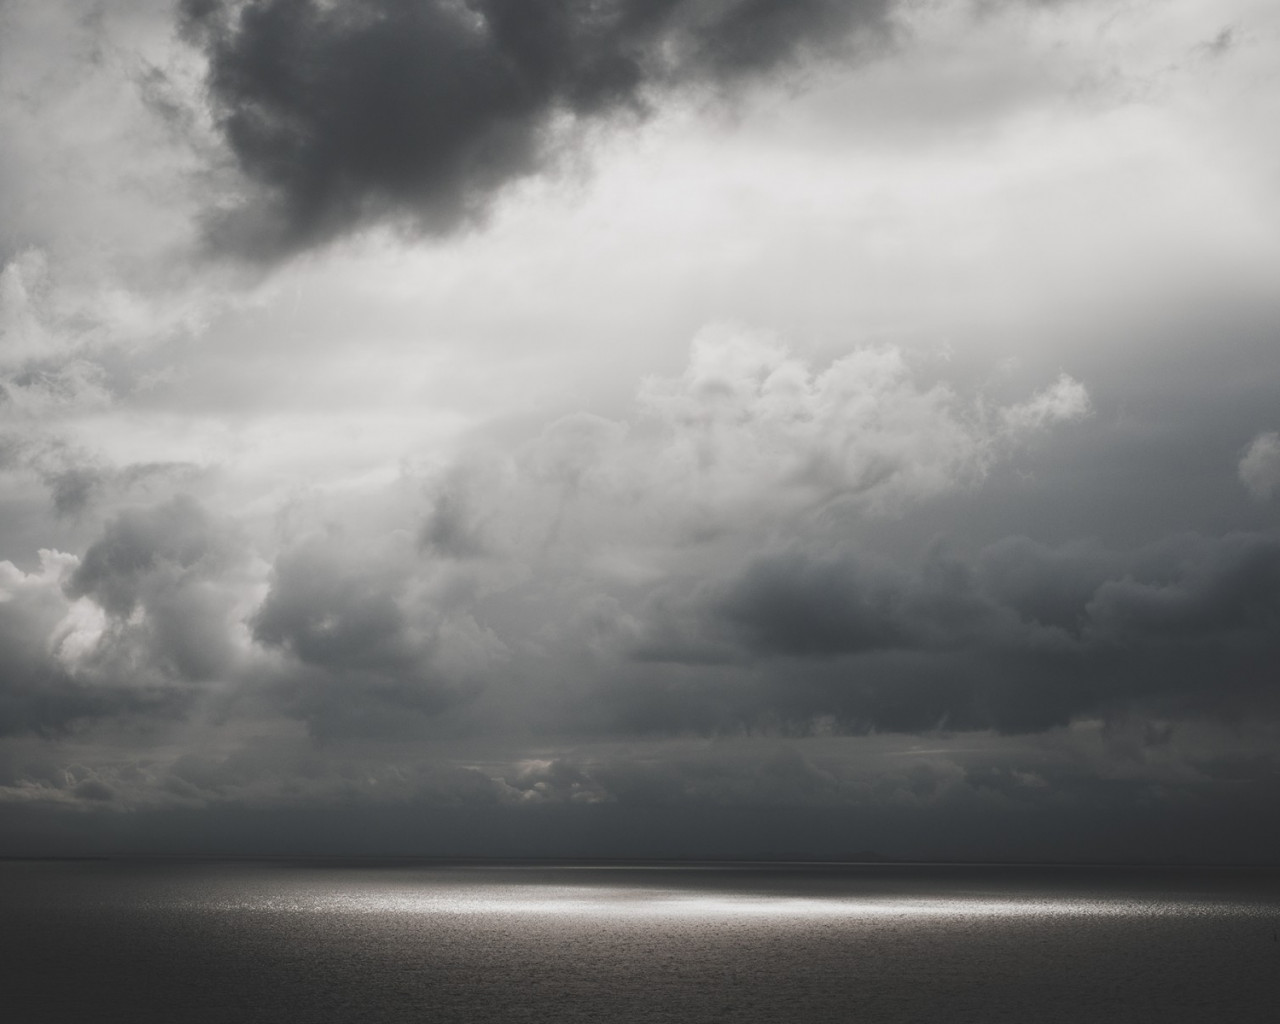 Ciemne chmury nad morzem